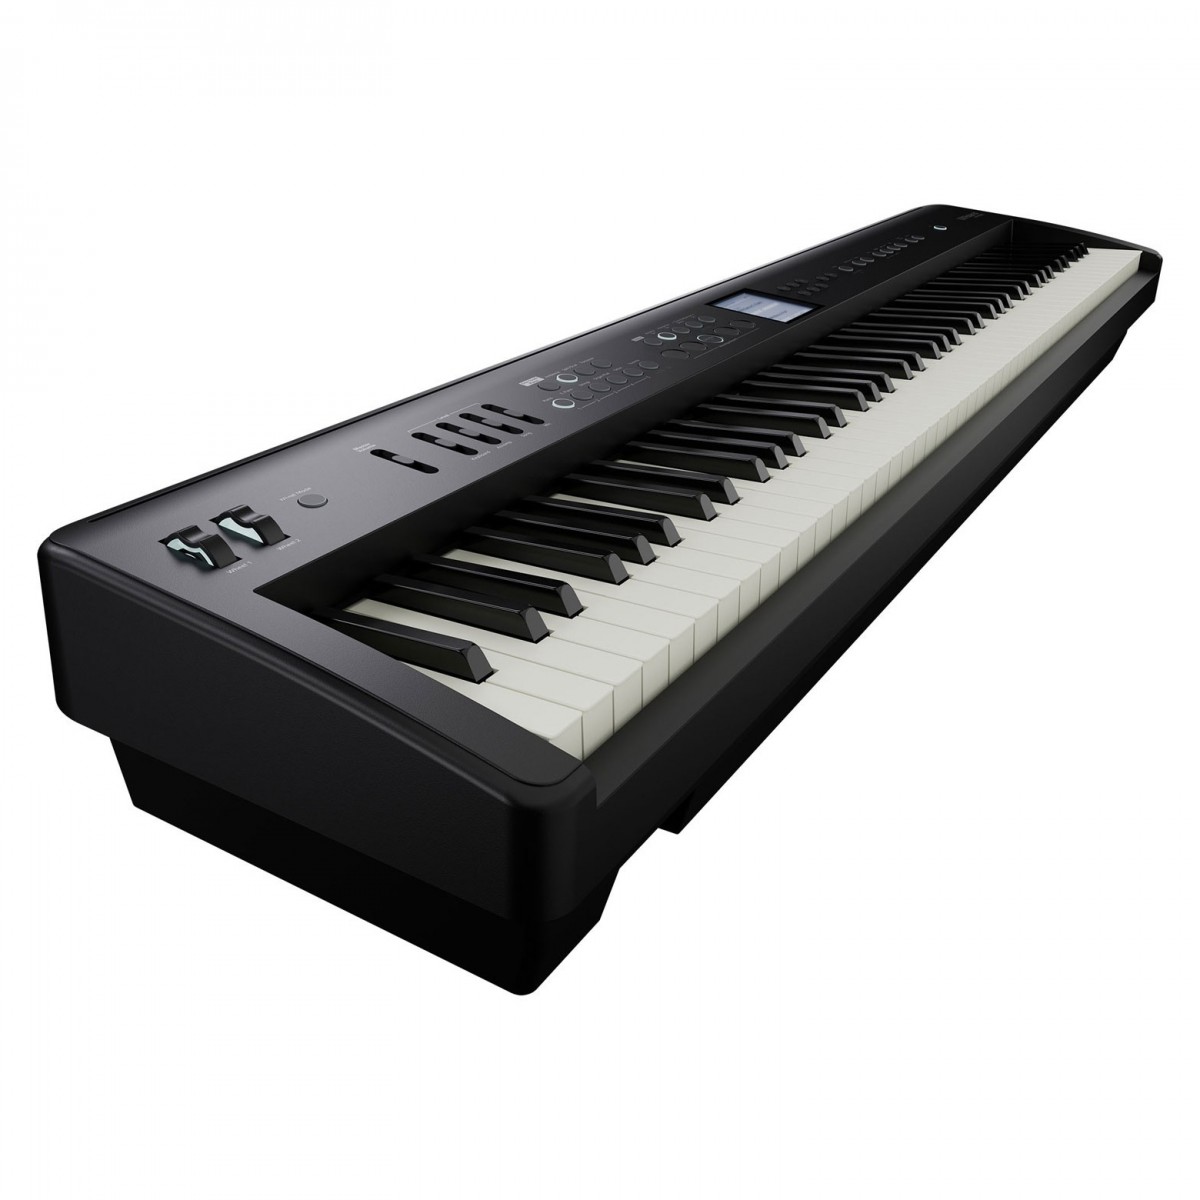 ROLAND FP-E50 PIANOFORTE DIGITALE 88 TASTI PESATI 4